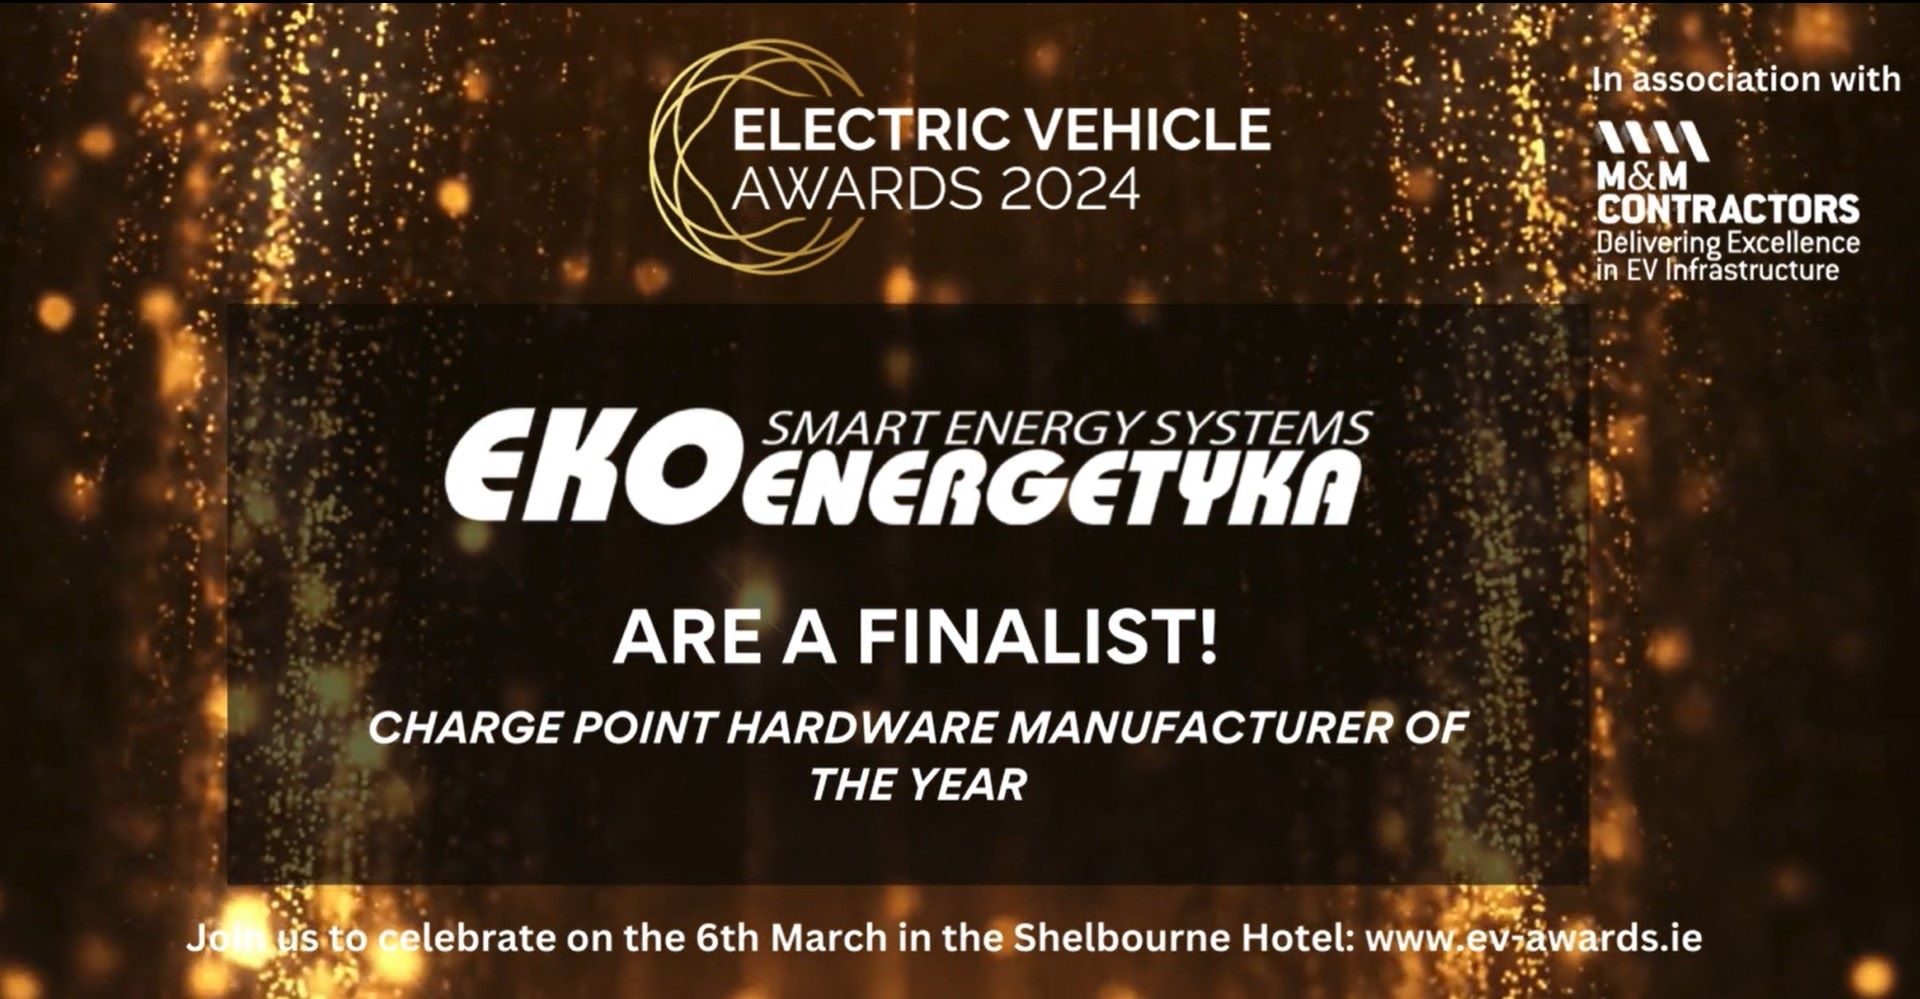 EV Awards 2024 in Ireland, Ekoenergetyka